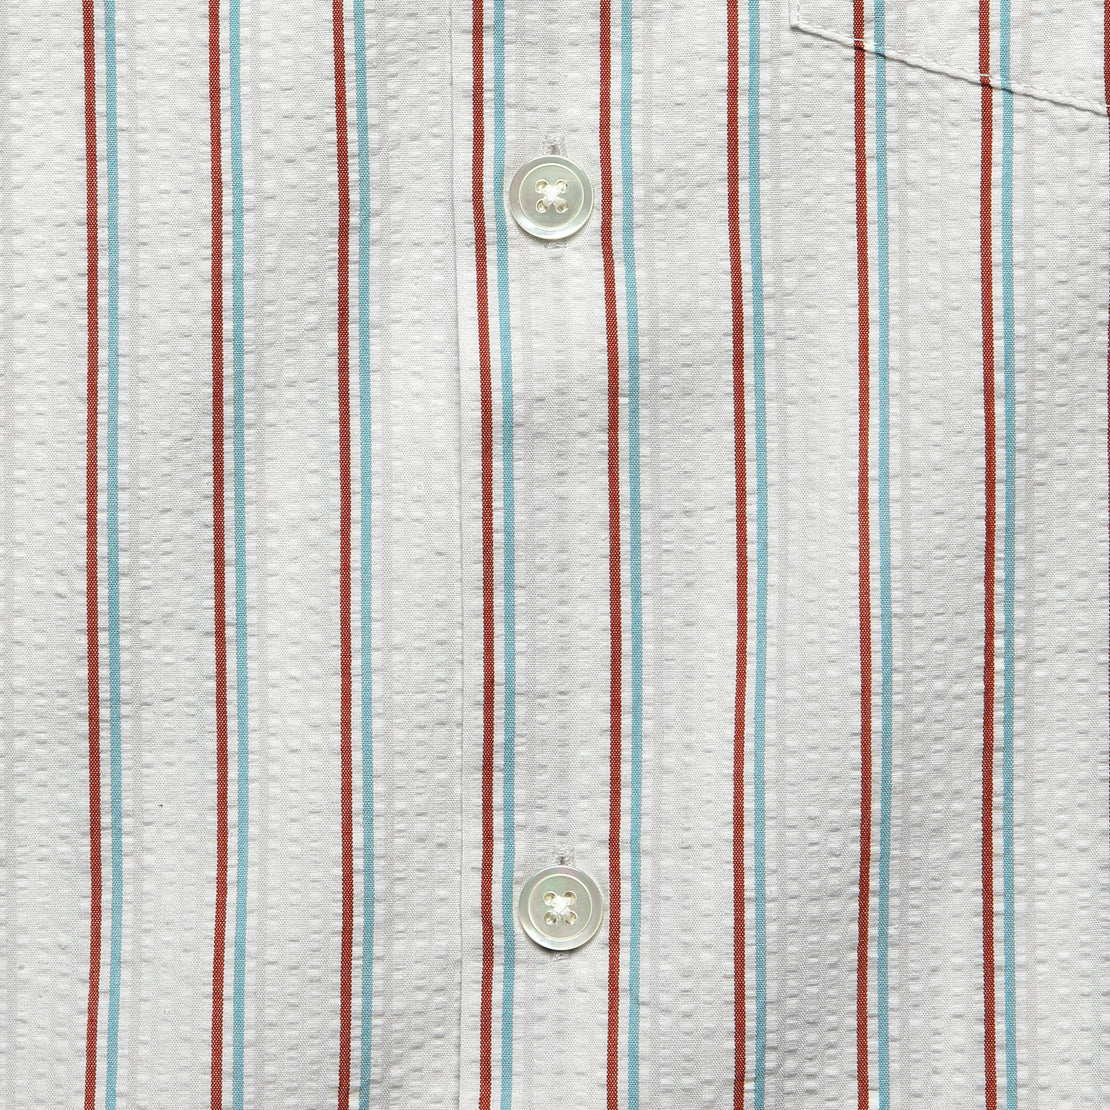 Seersucker Camp Shirt - Stripe - Portuguese Flannel - STAG Provisions - Tops - S/S Woven - Seersucker